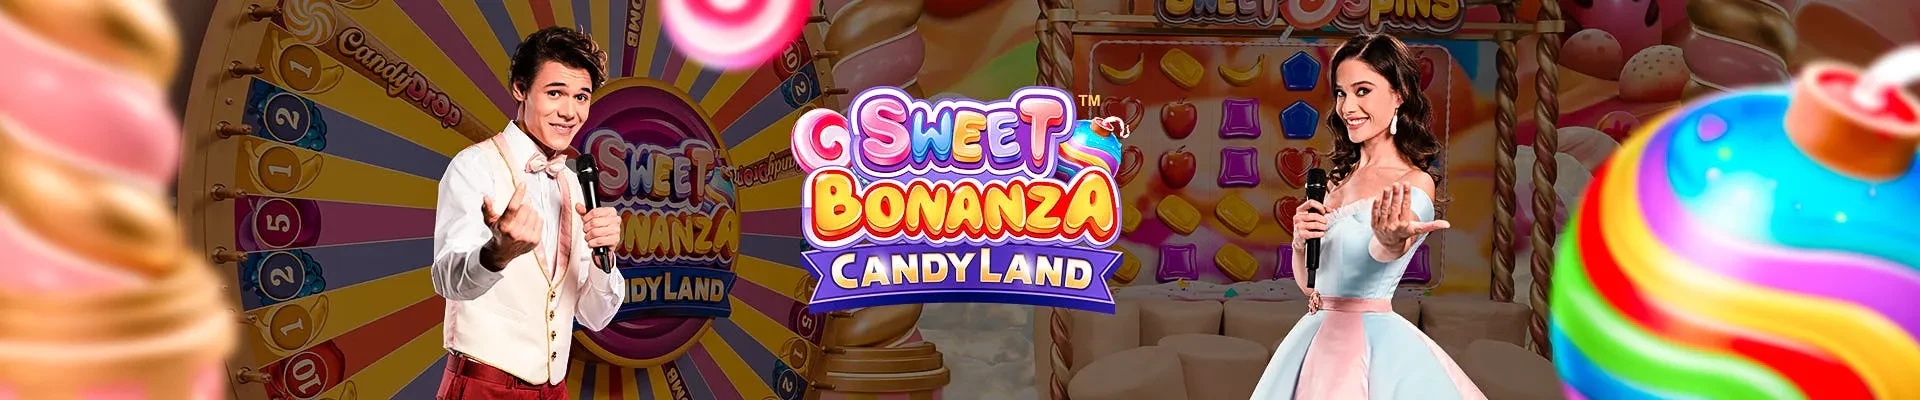 Sweet Bonanza CandyLand header